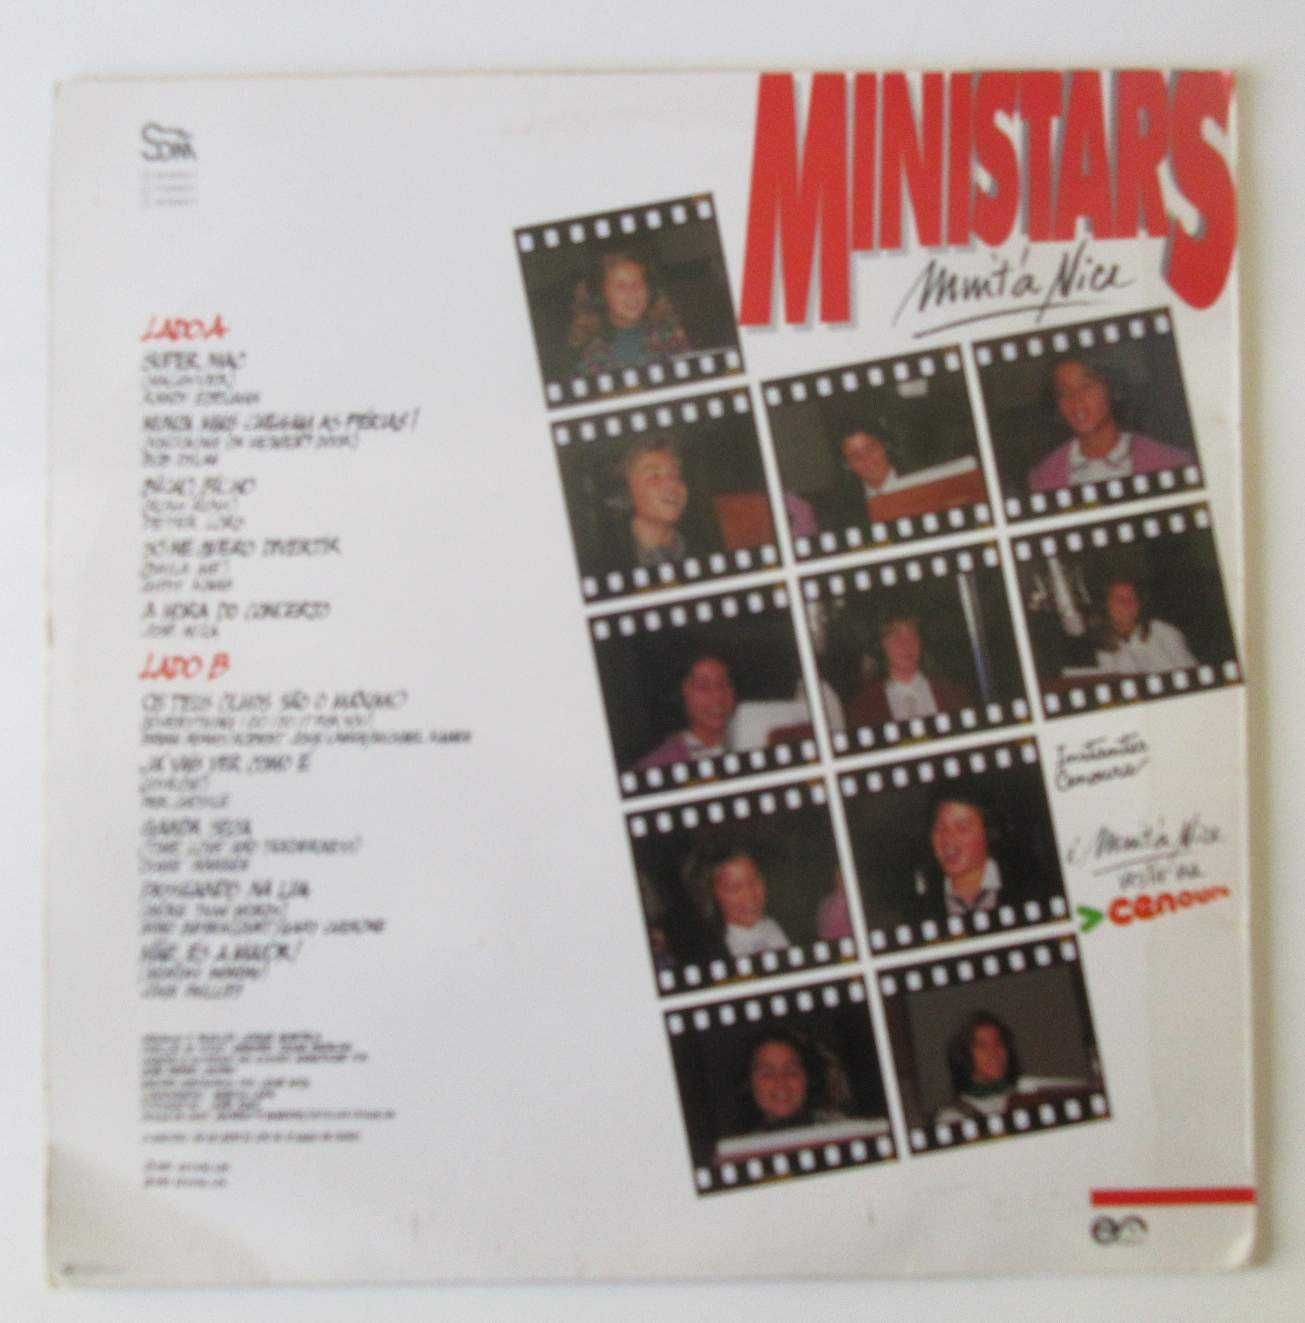 MINISTARS - Muit'a Nice! (LP)